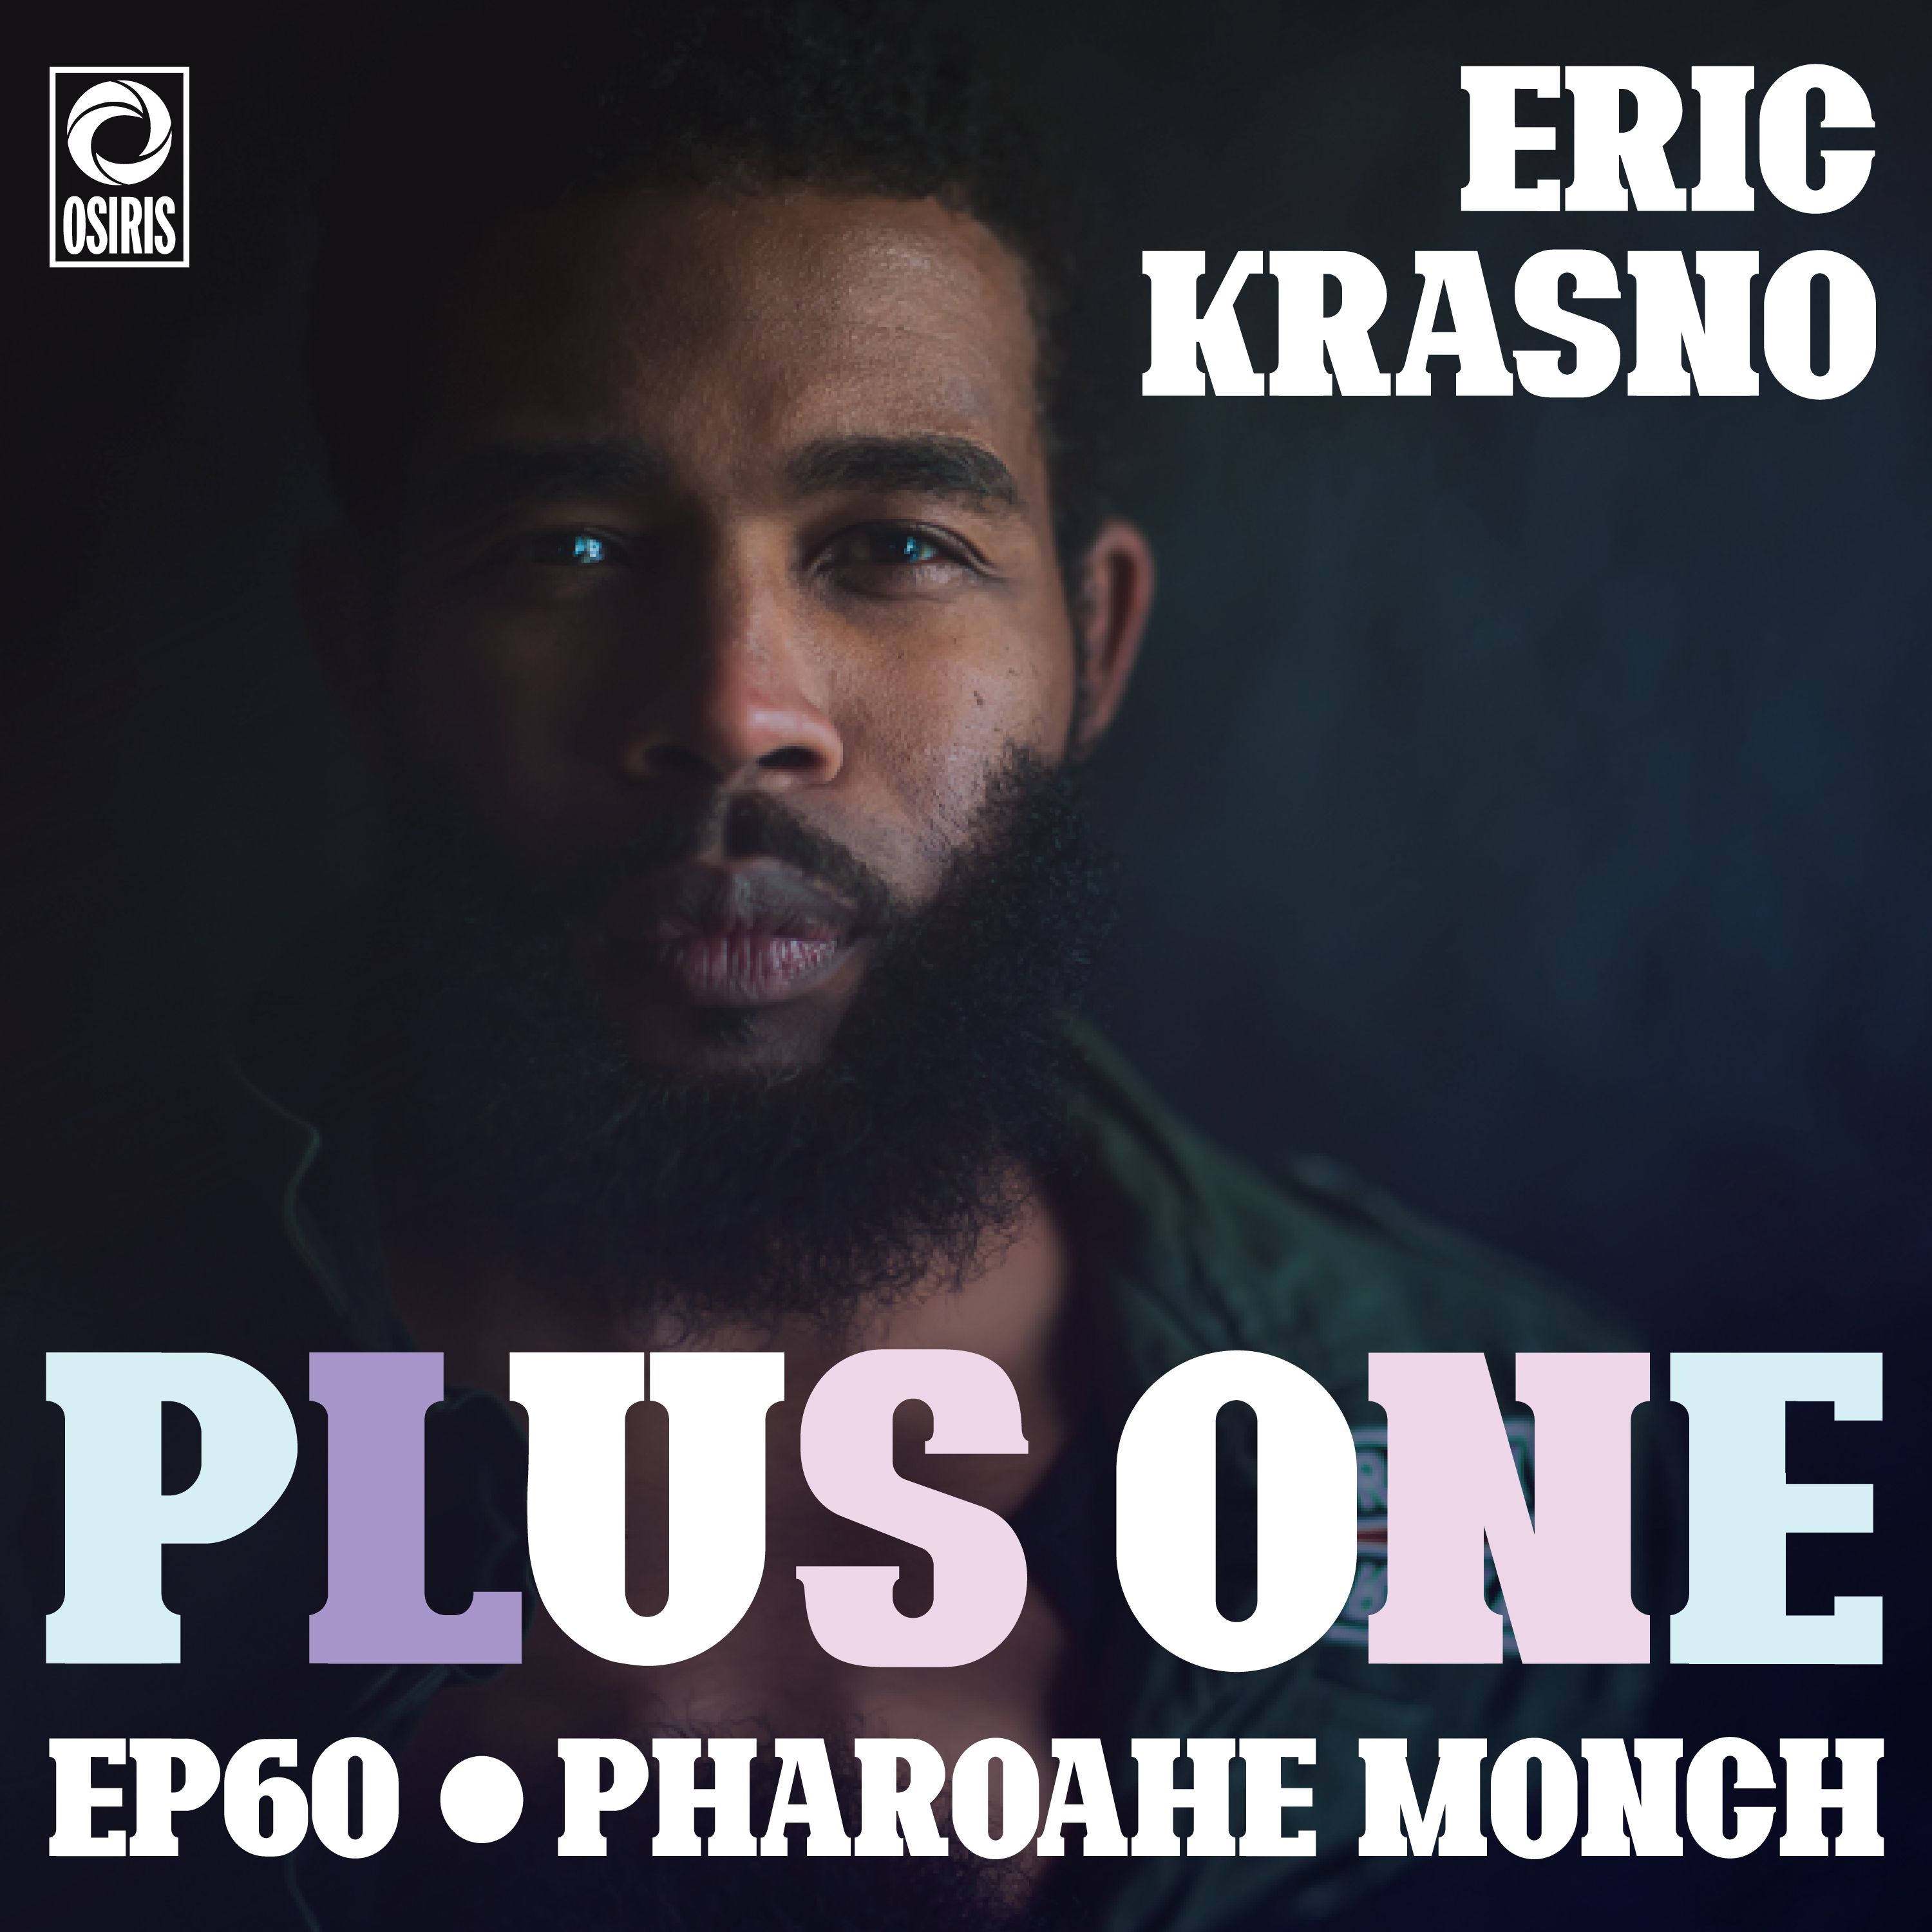 Pharoahe Monch - Simon Says [Audio] 